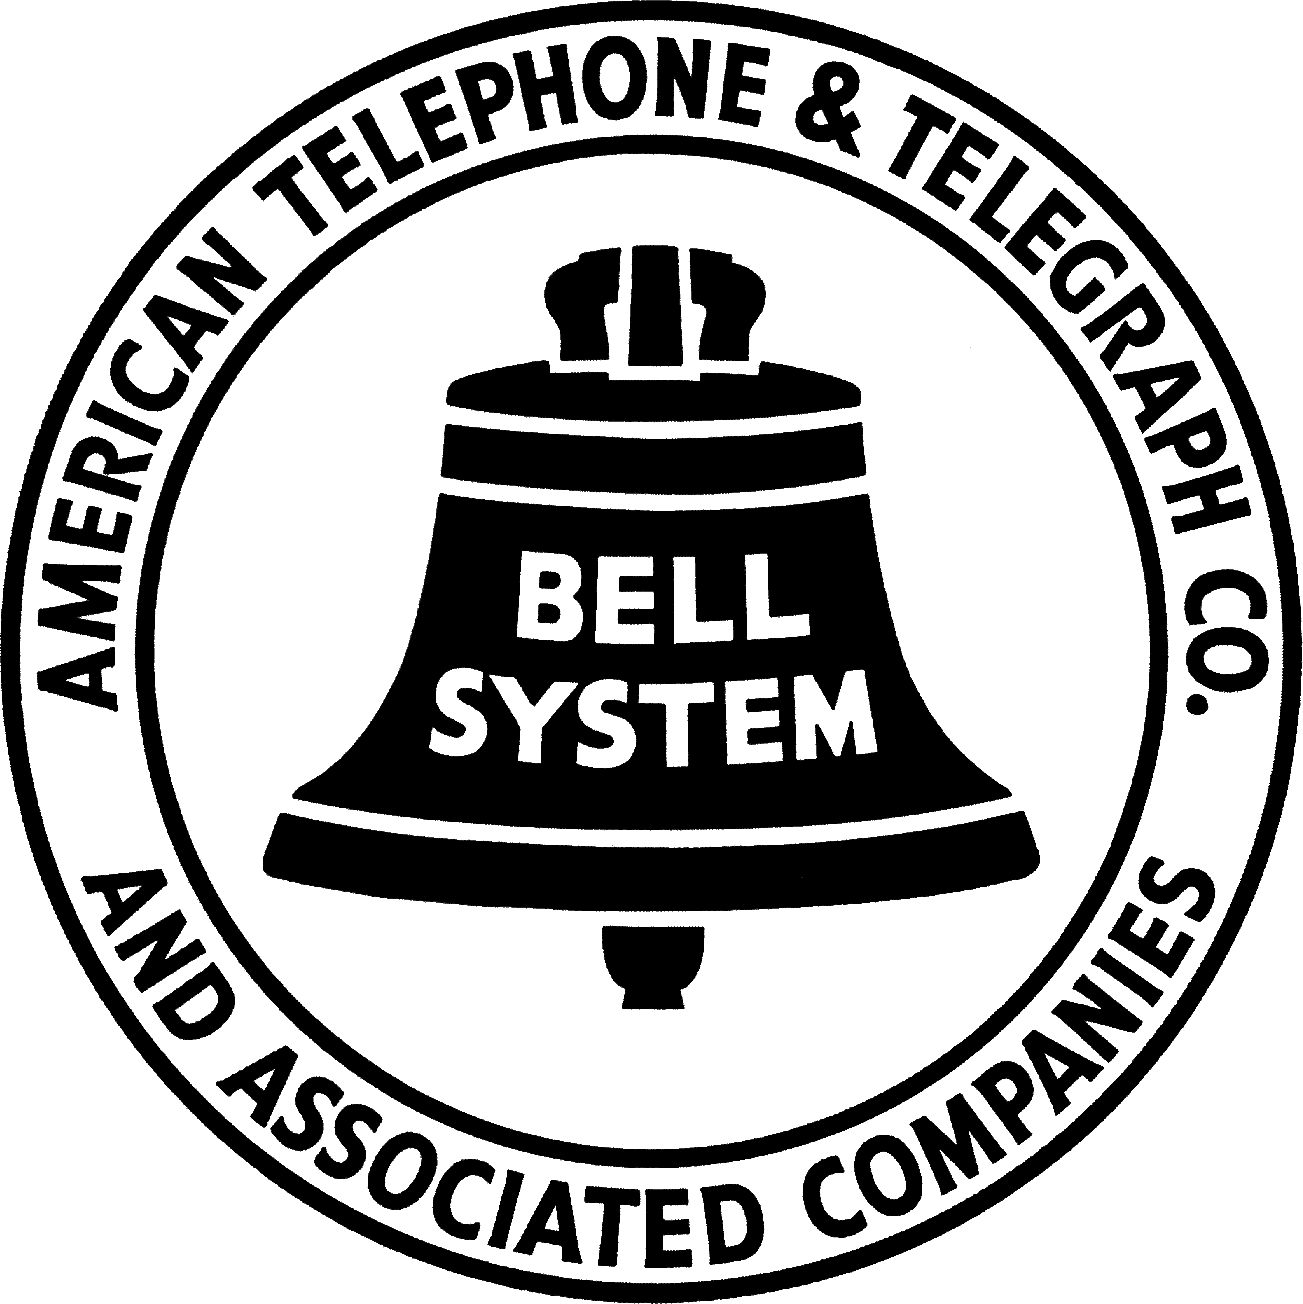 Old Phone Company Logo - Bell Telephone Company. Bell System. Telephone, Belle, Old phone